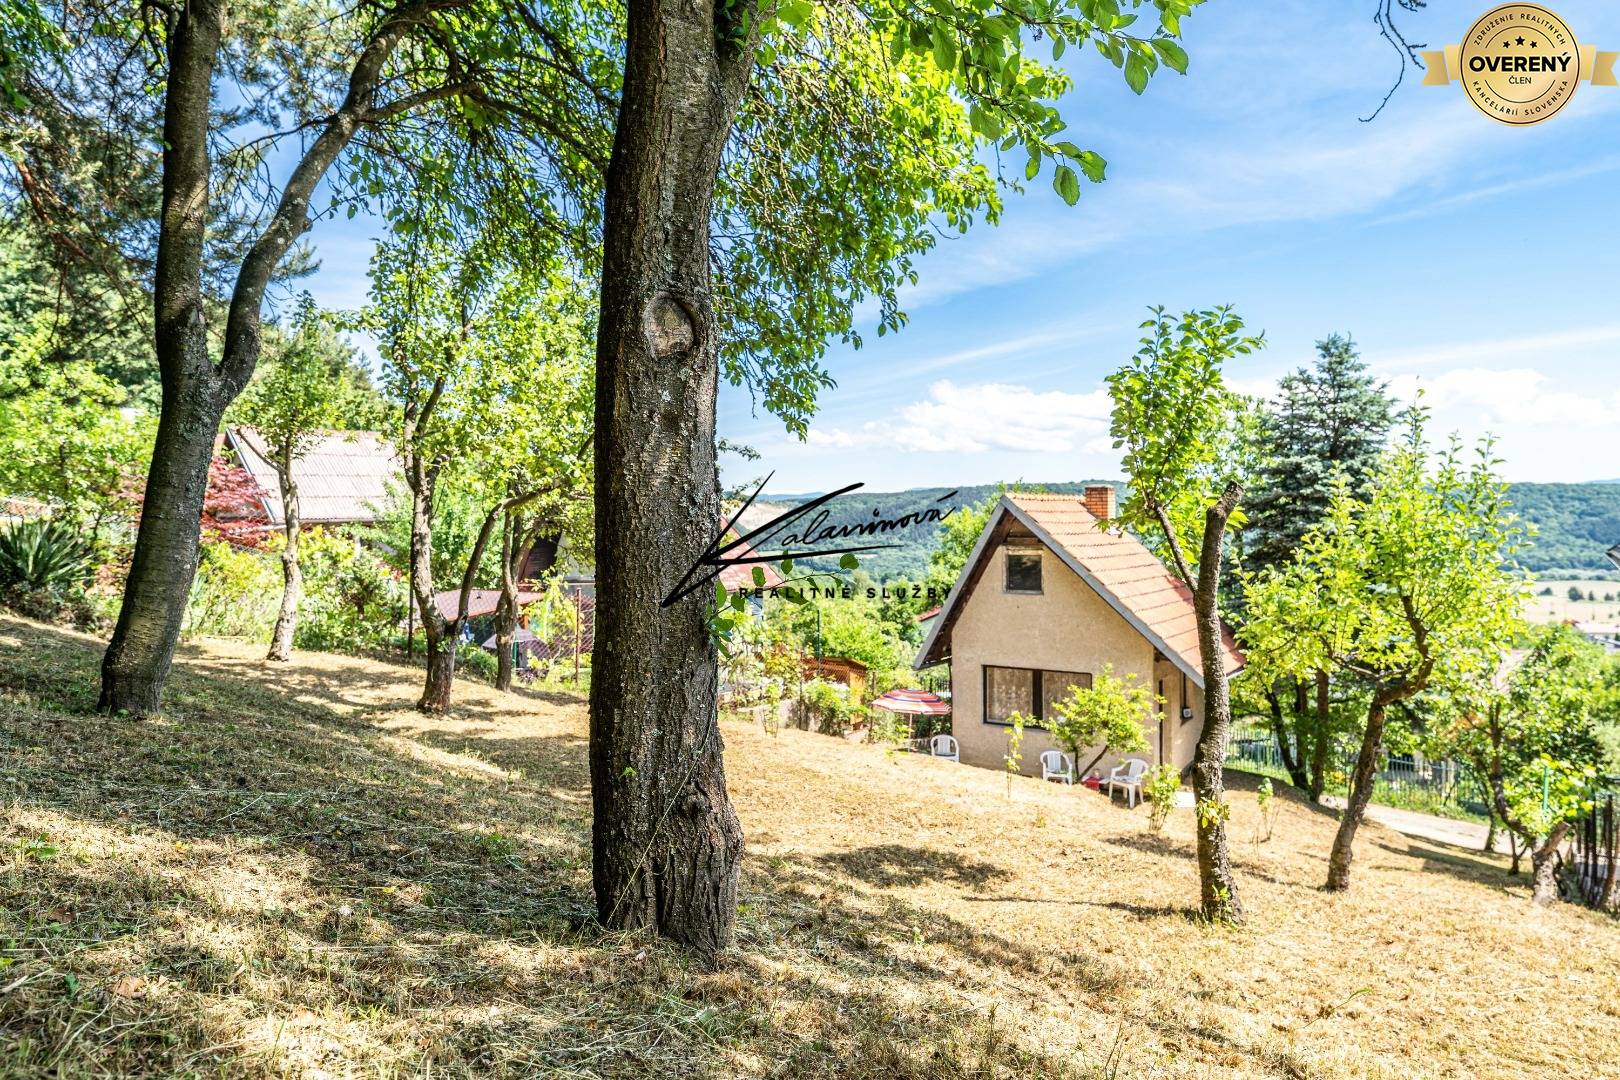 Sale Cottage, Košice-okolie, Slovakia